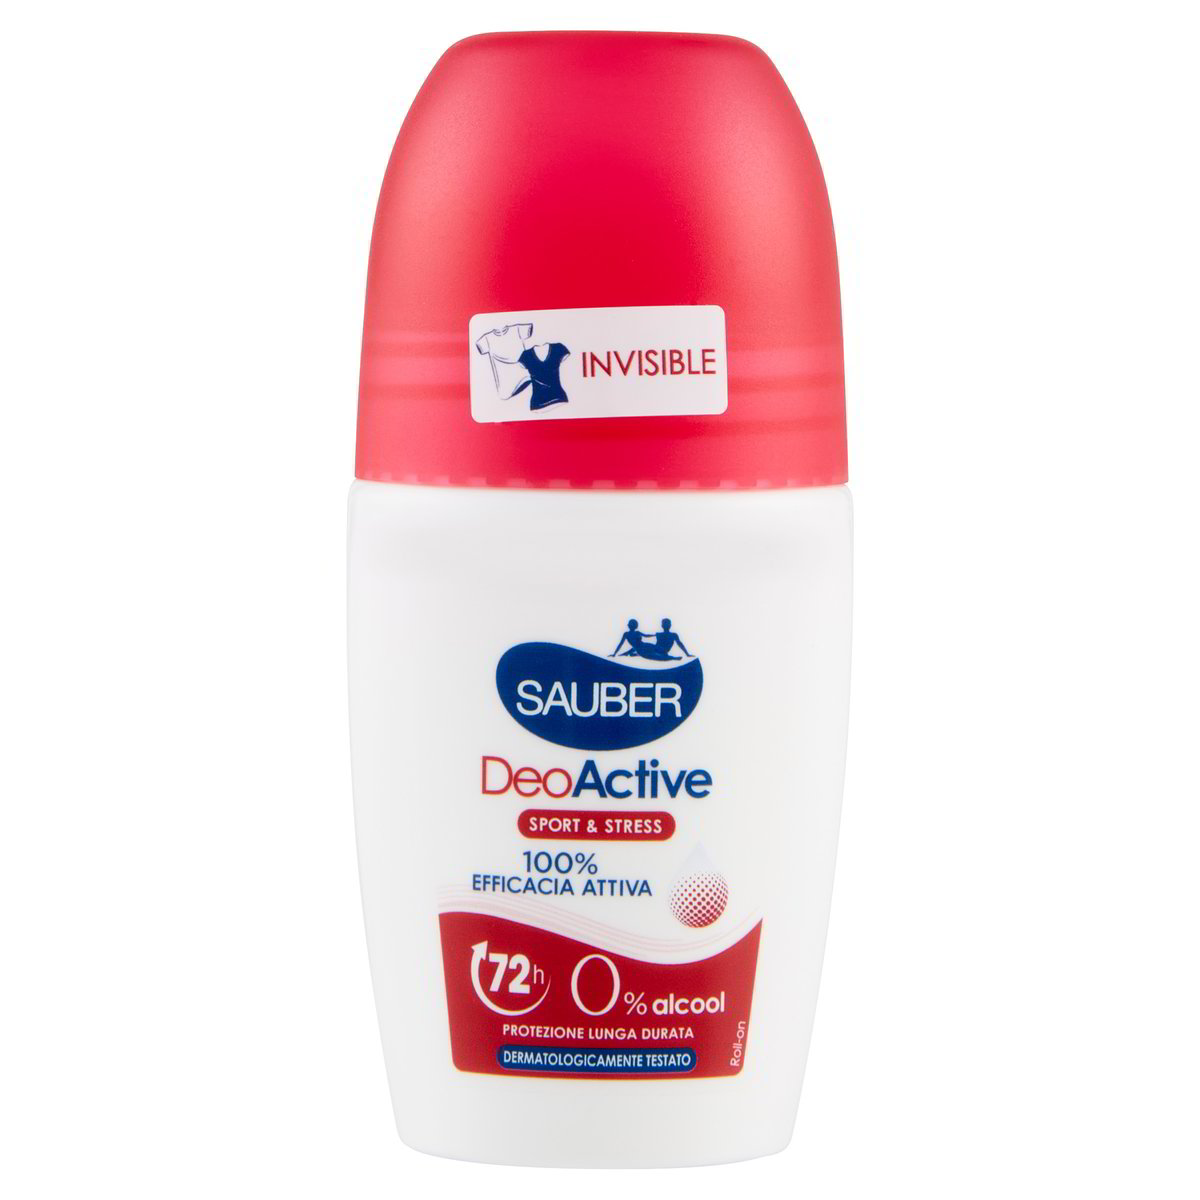 Sauber Deodorante roll on Deoactive